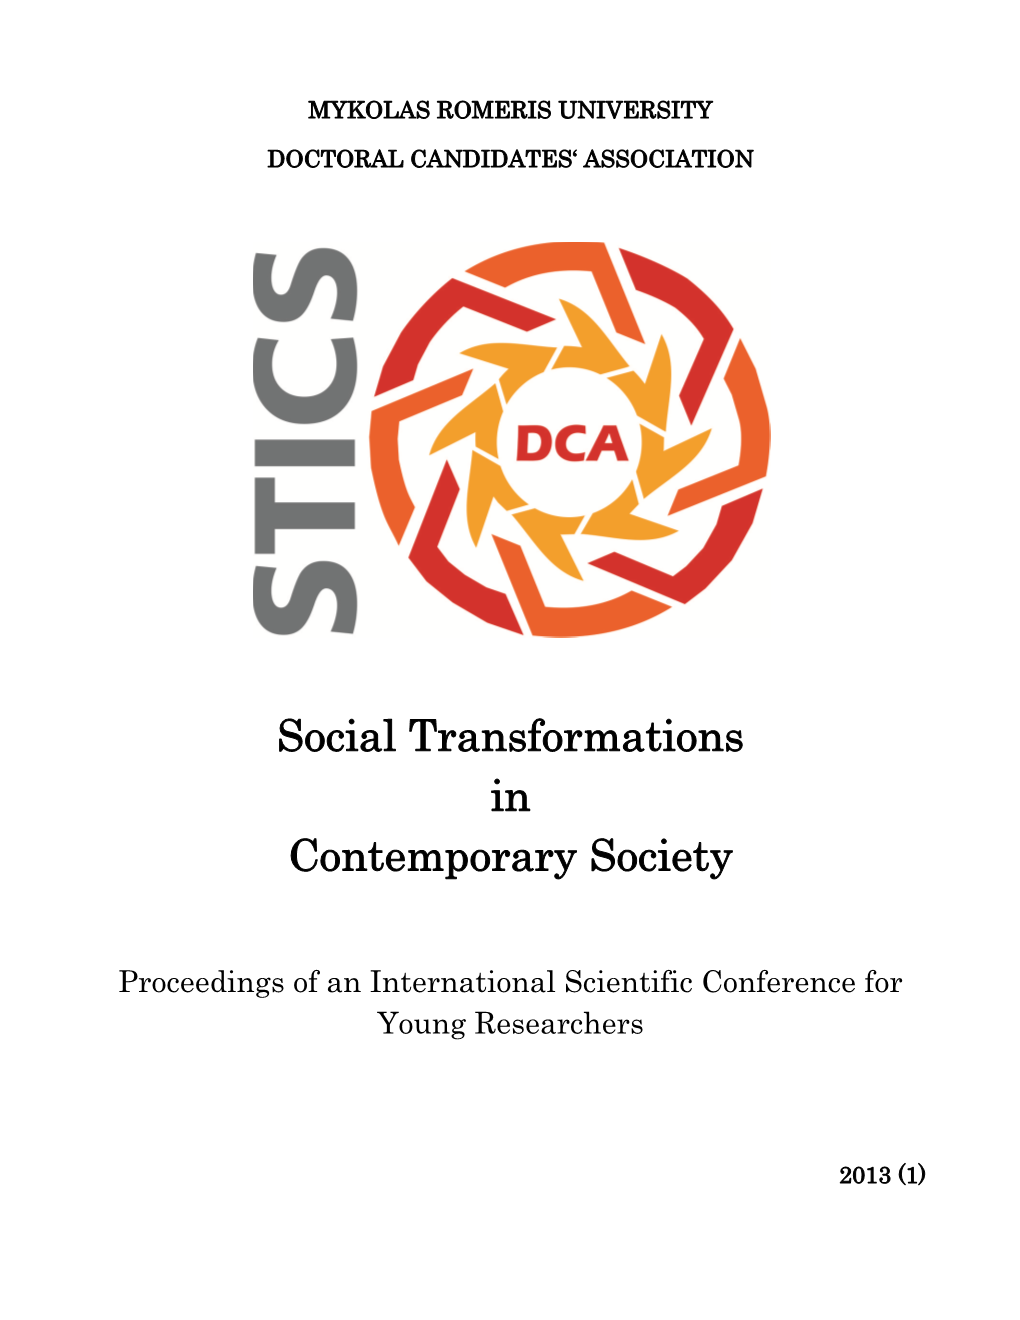 Social Transformations in Contemporary Society 2013’’